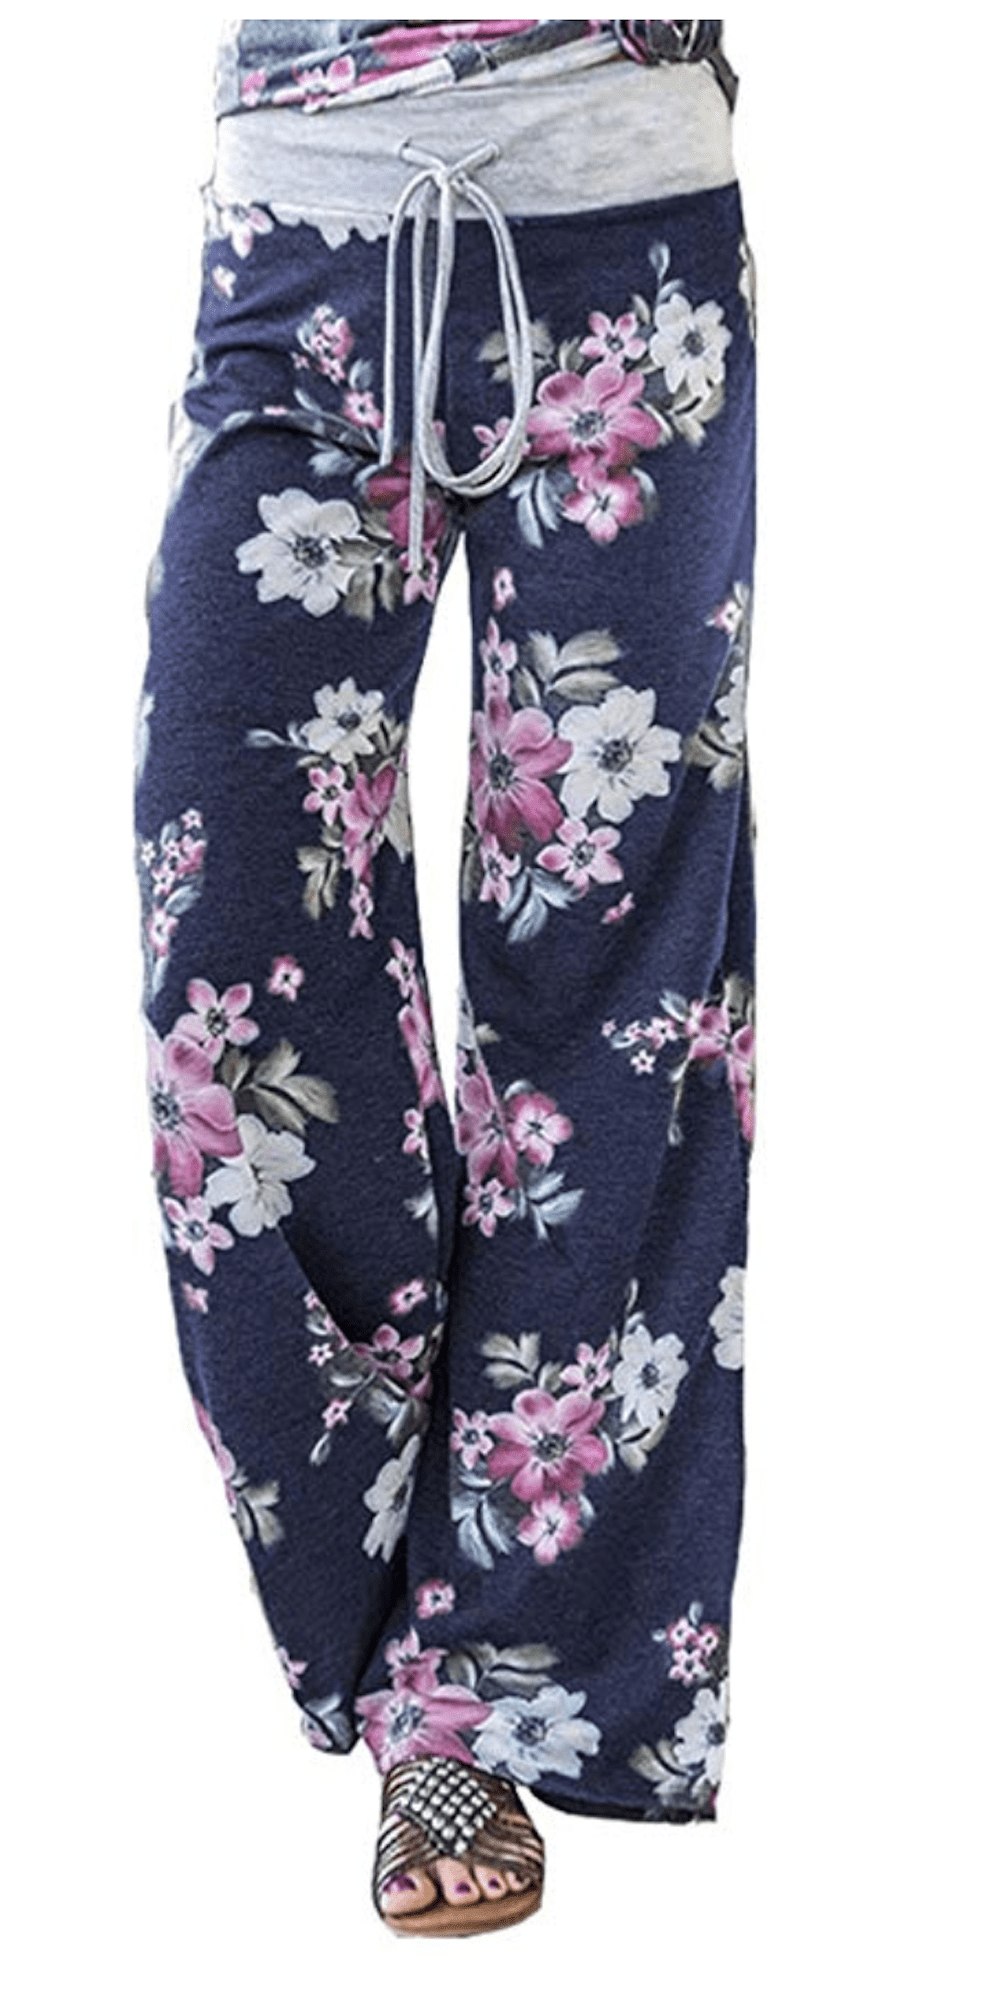 JINGCHENG Women's Comfy Stretch Floral Print High Waist Drawstring Palazzo Wide Leg Pants